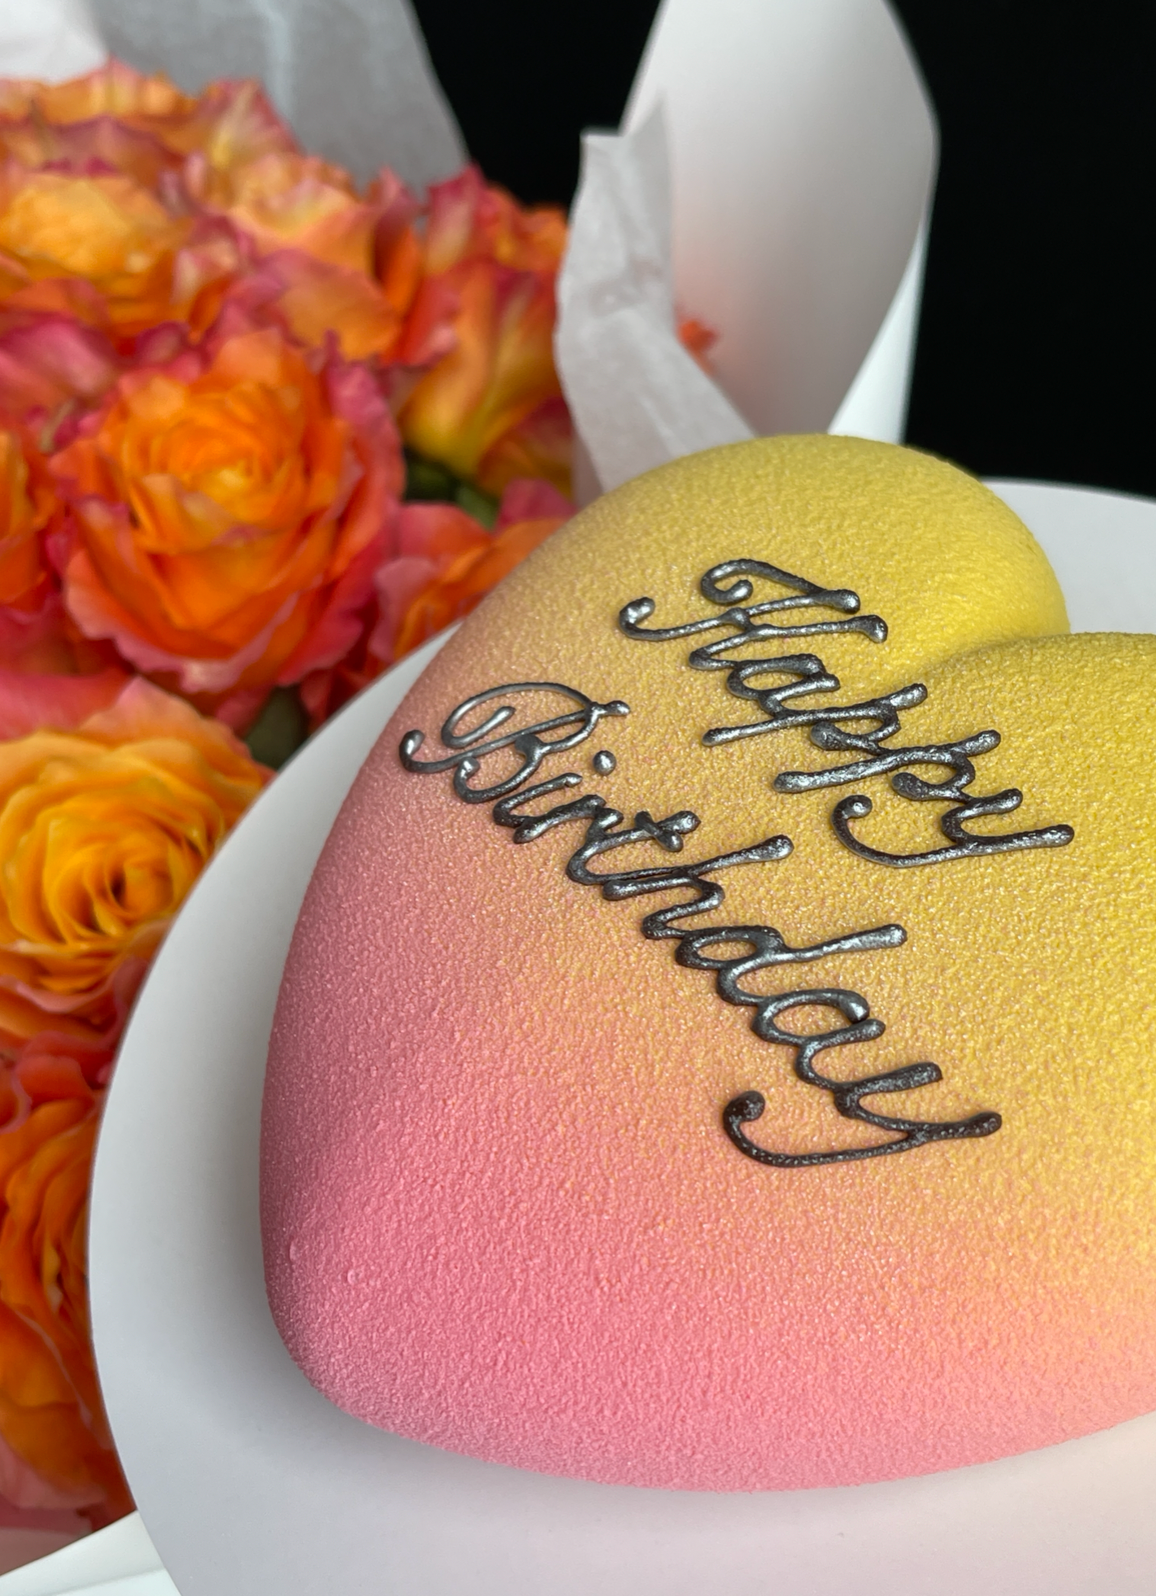 Cake “Happy Birthday” - mango, passion fruit, coconut